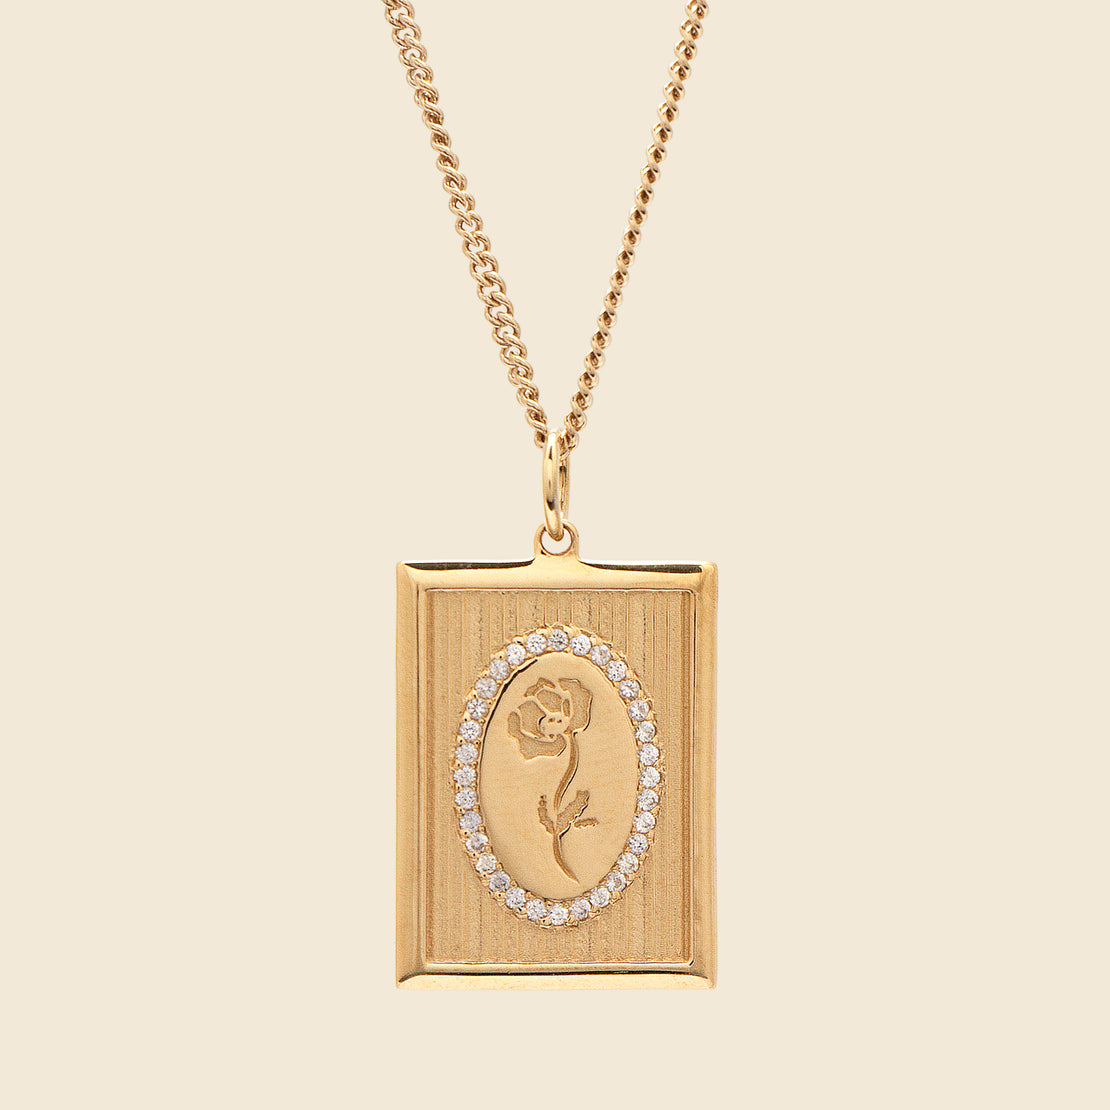 Miansai Poppy Frame Pendant Necklace - Gold/White Sapphire